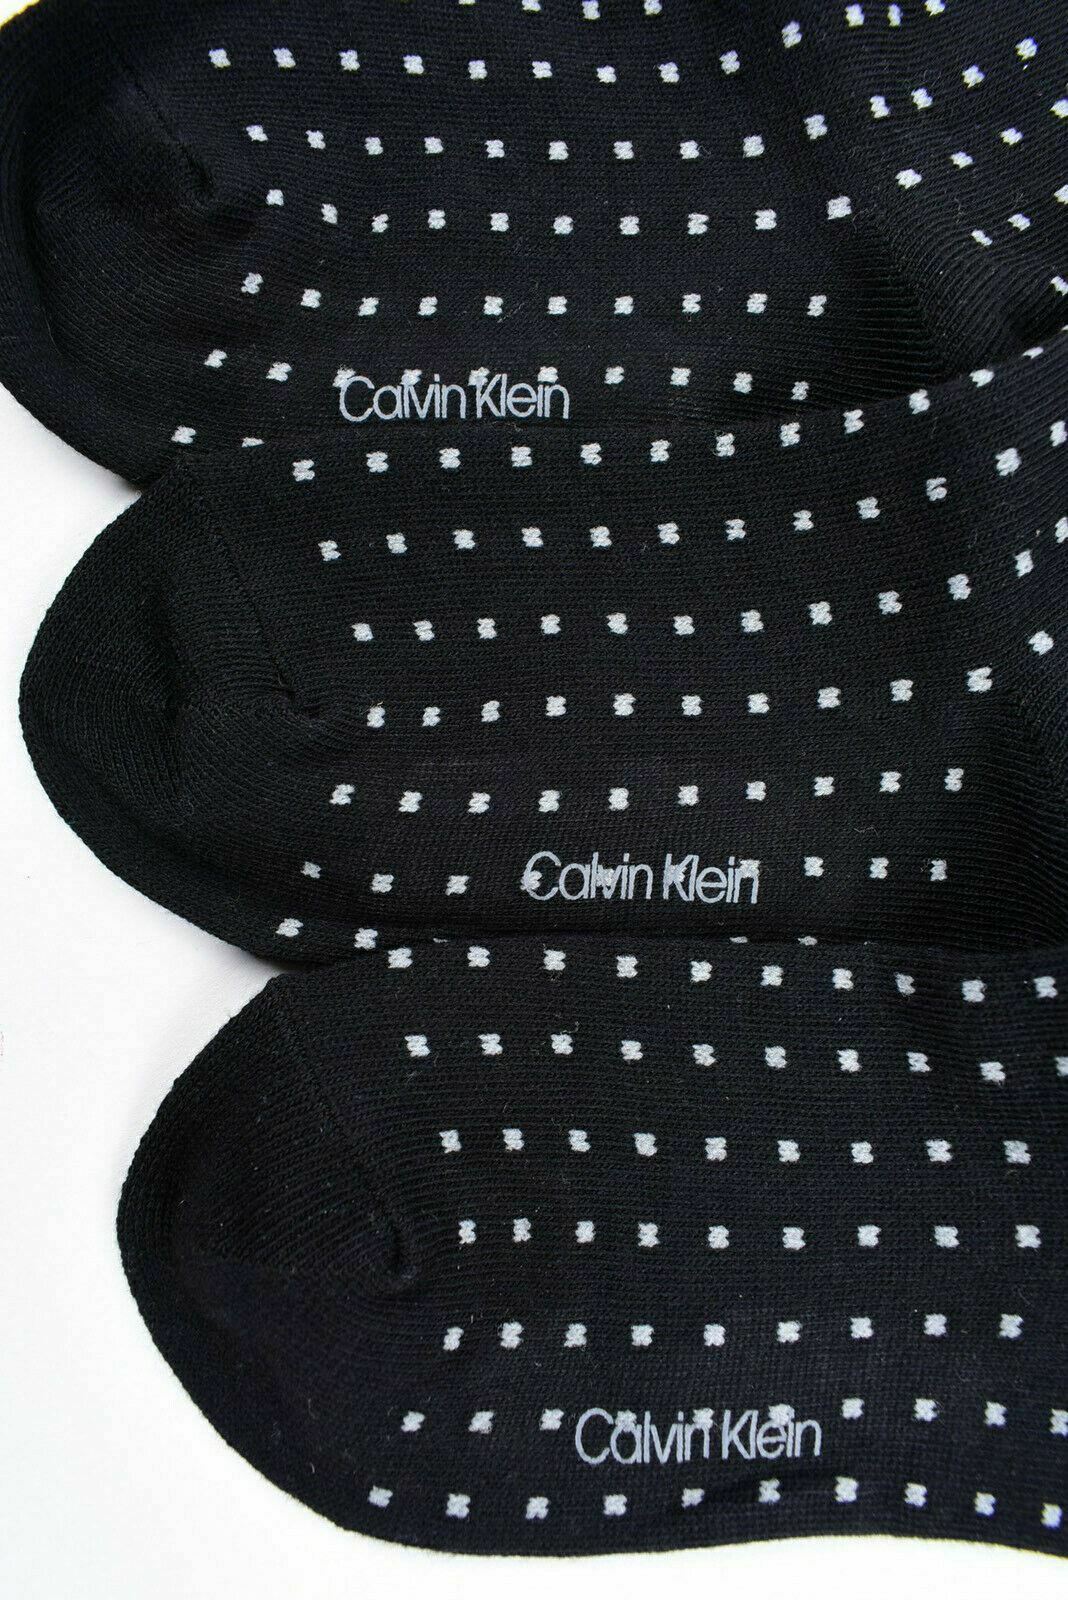 CALVIN KLEIN 3-pack Girls' Kids' Socks, Black/Dotted, UK kids shoe size 9-12